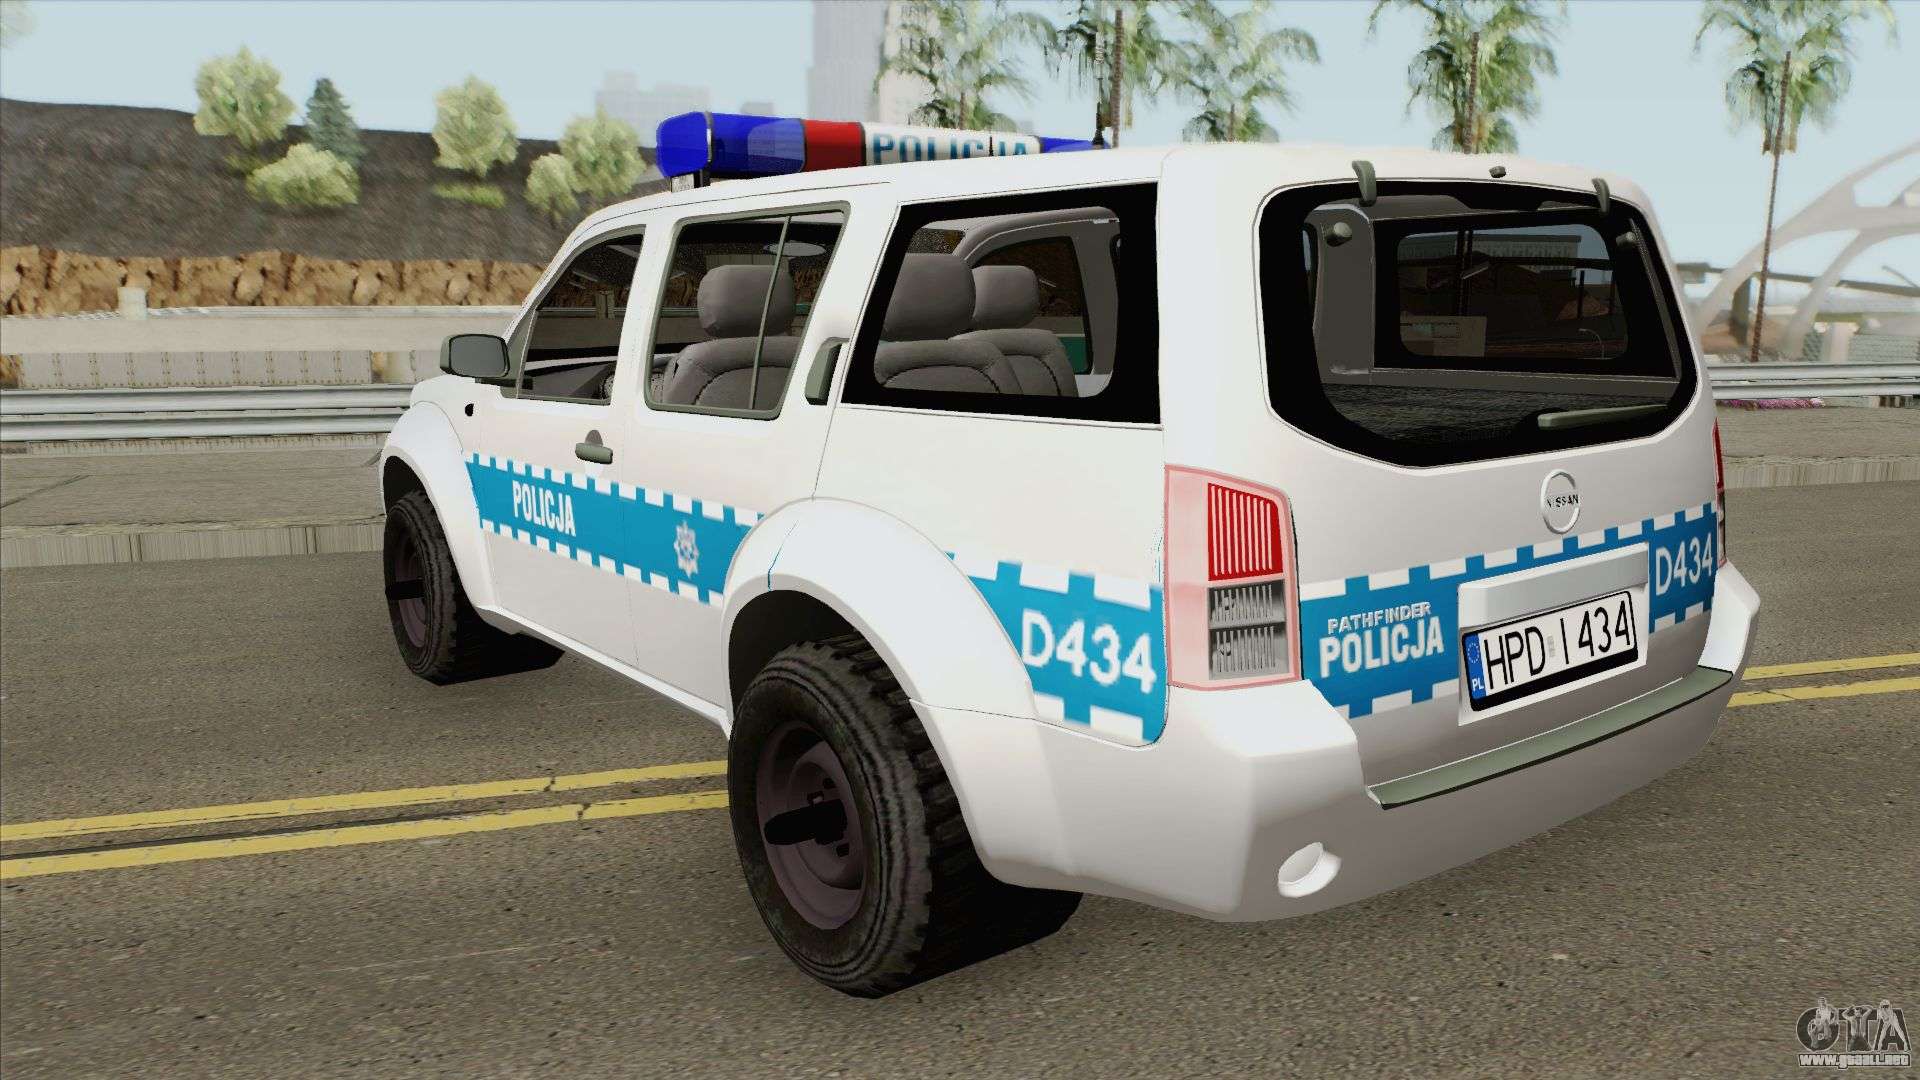 Nissan Pathfinder (Policja KMP Biala Podlaska) para GTA